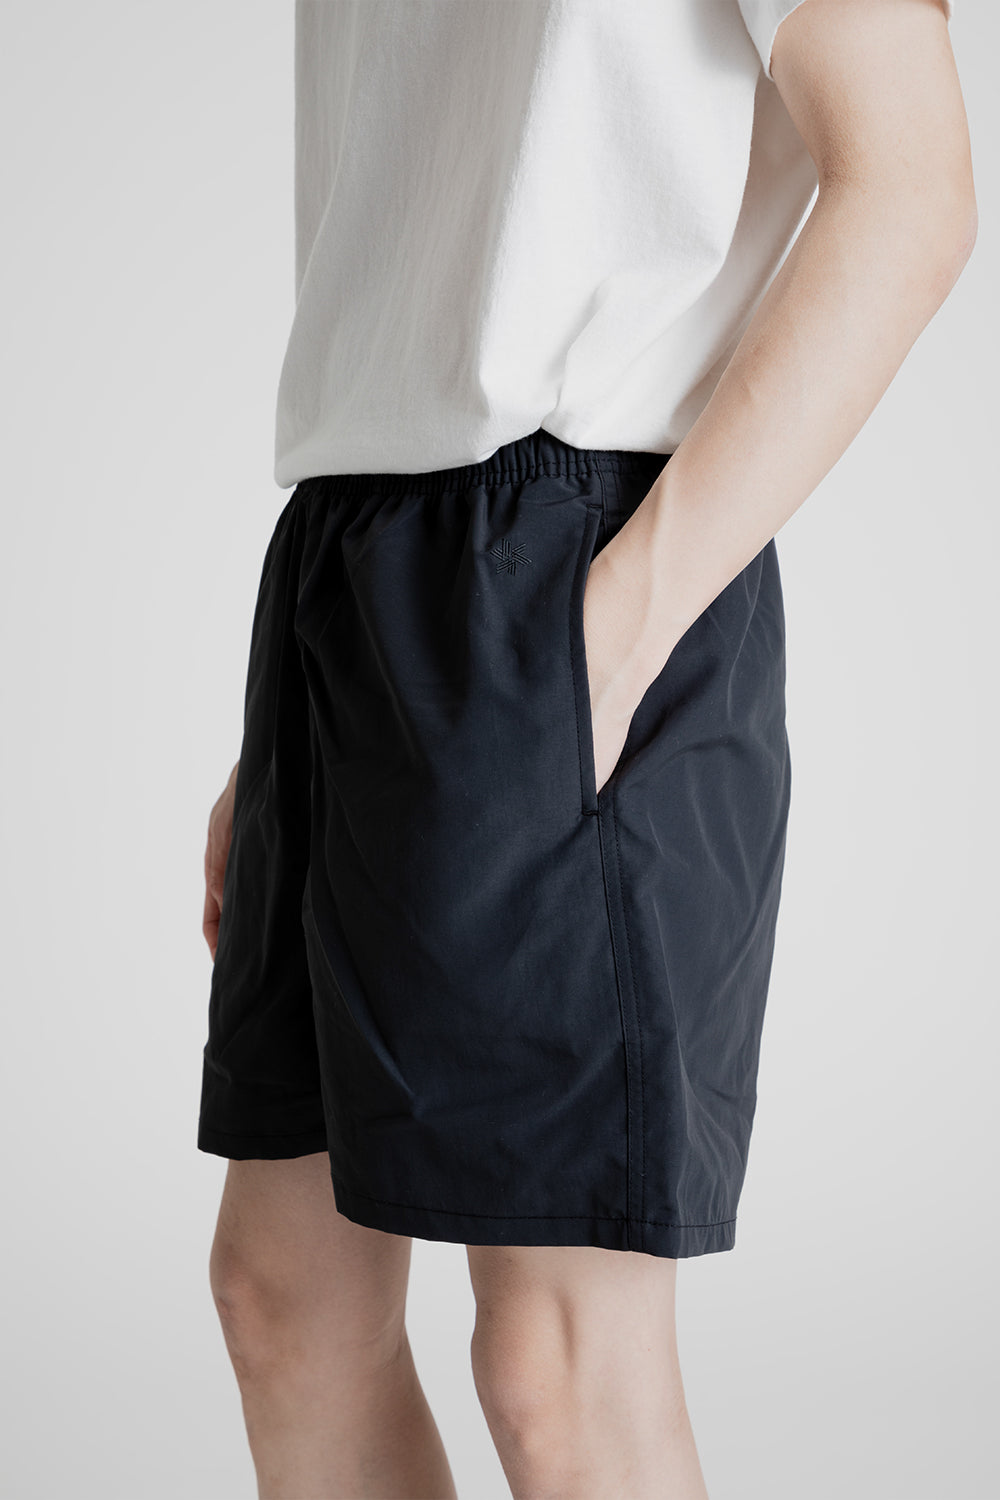 Goldwin Nylon Shorts 5 Inch in Black